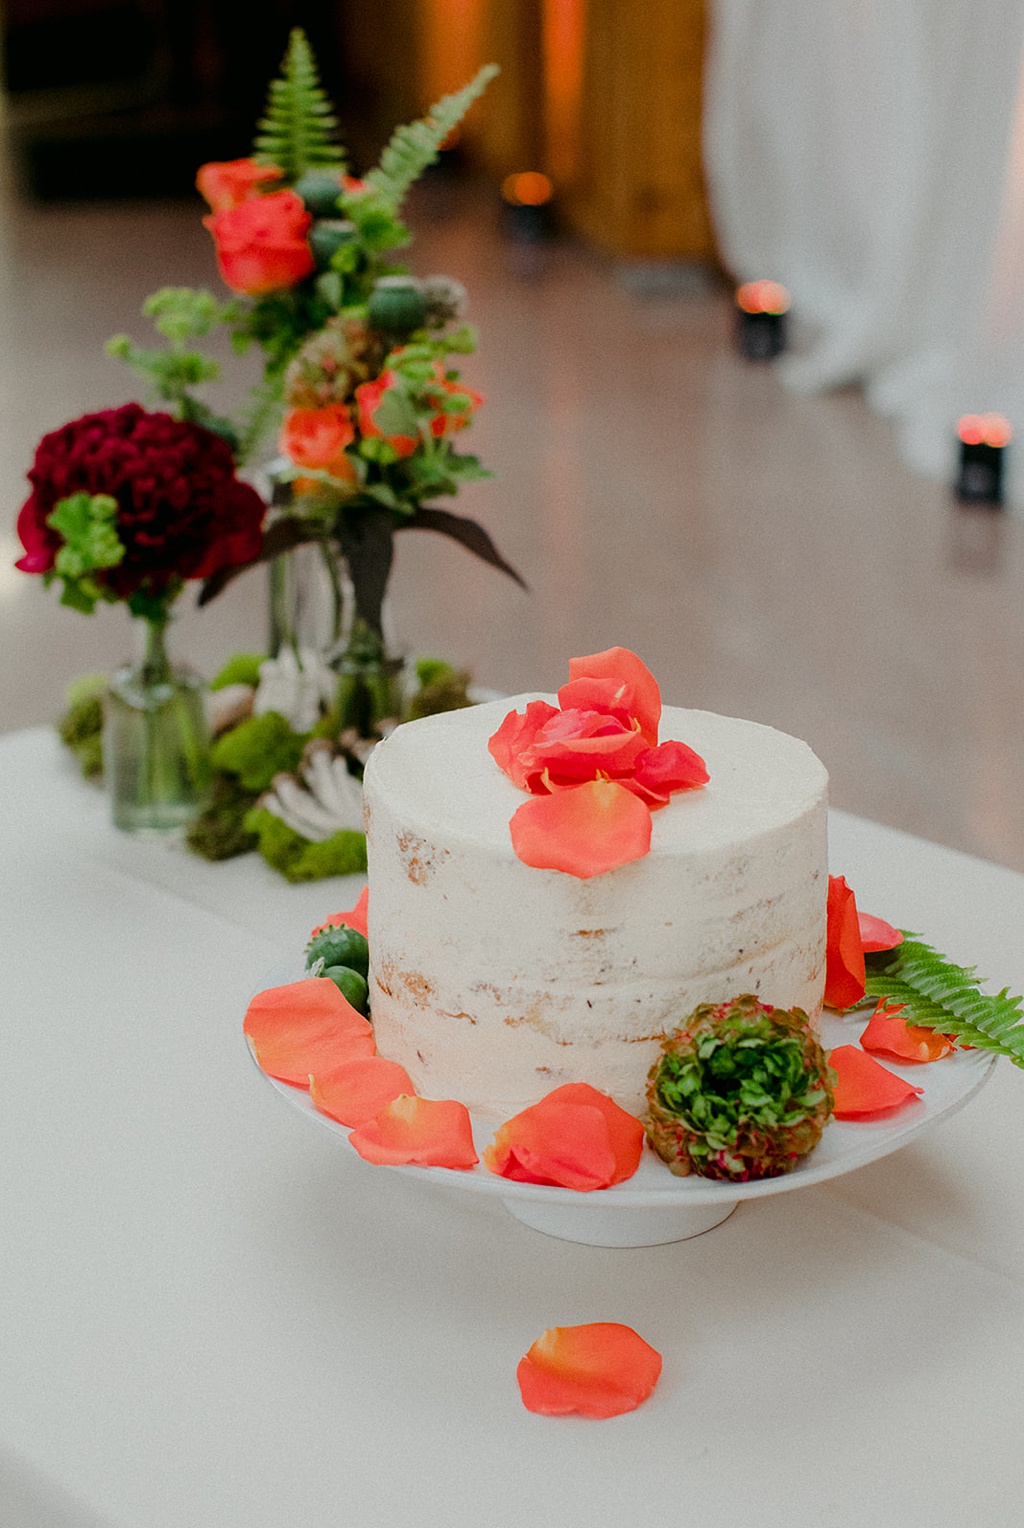 The wedding cake at Kiana Lodge